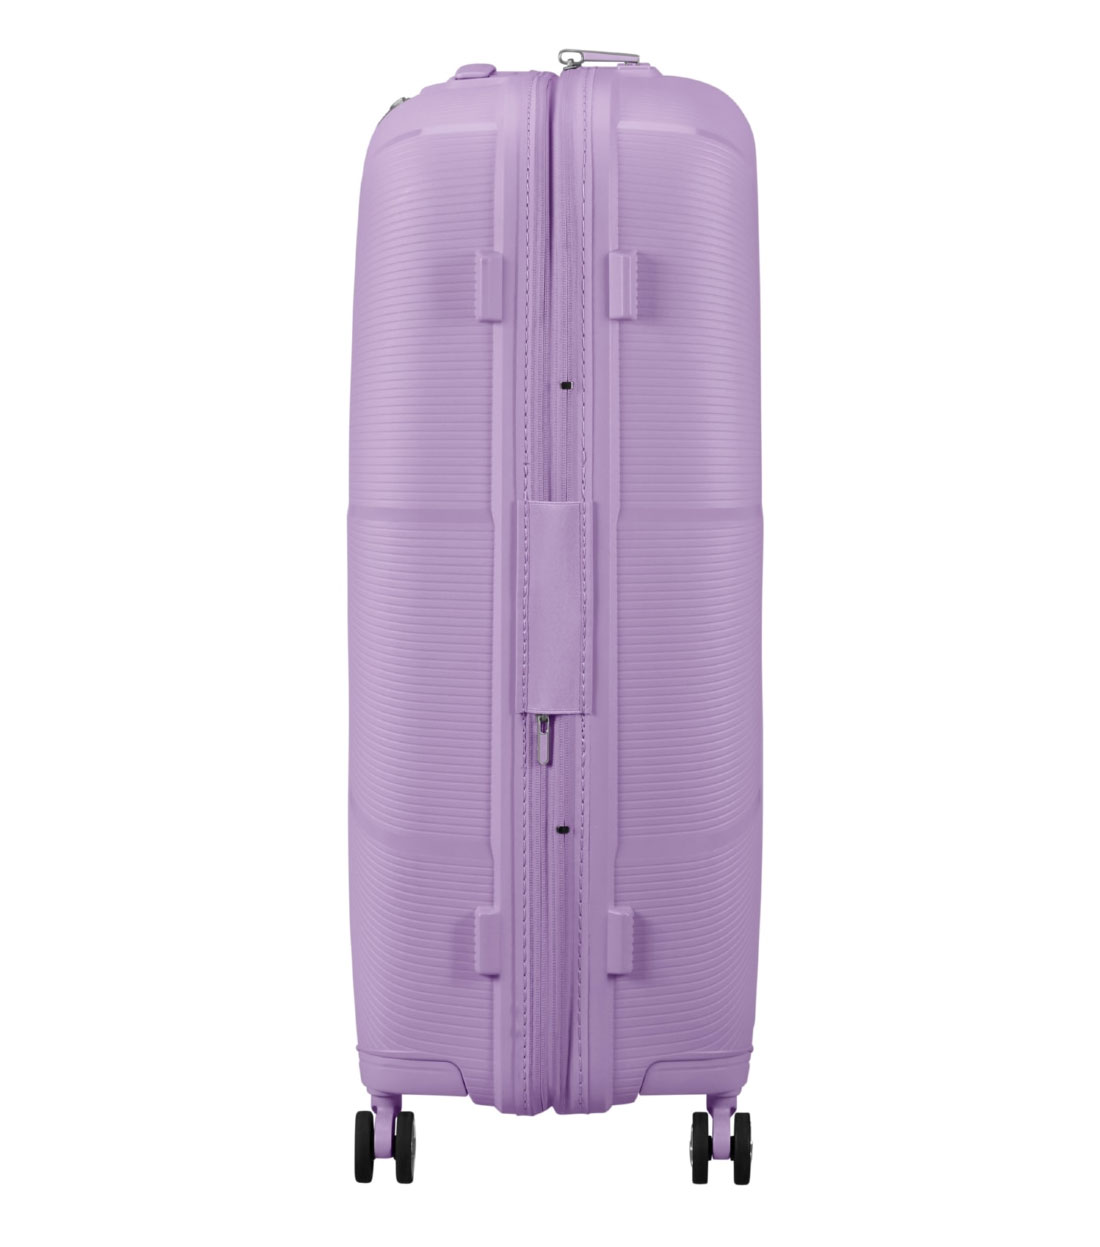 Большой чемодан American Tourister Starvibe MD5*81004 (77 см) - LAVENDER